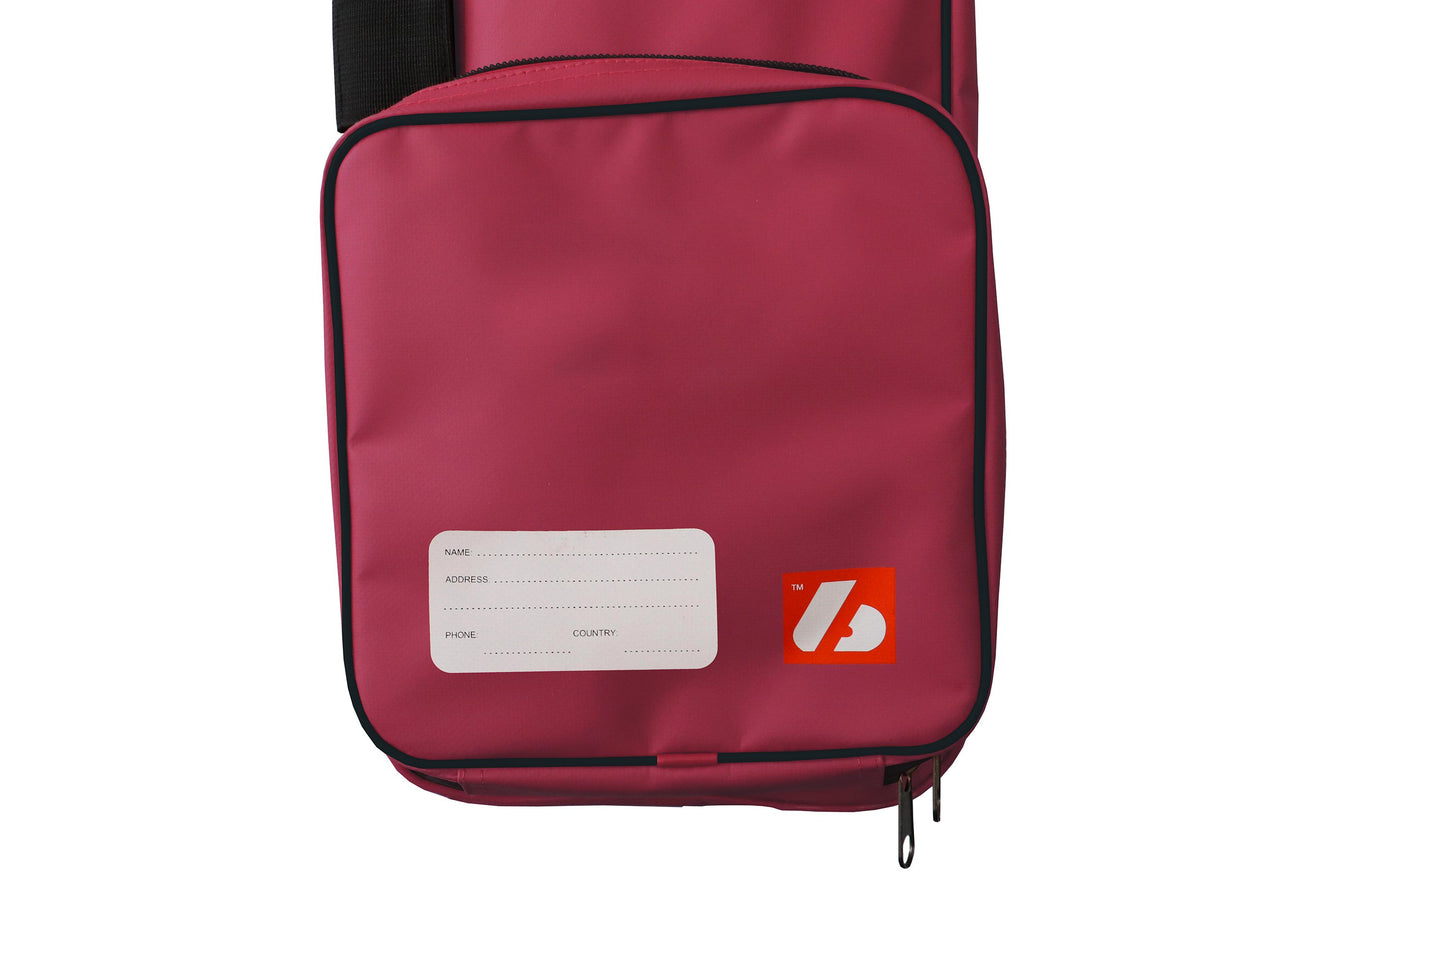 SMS-05 Biathlon Bag, Size Senior